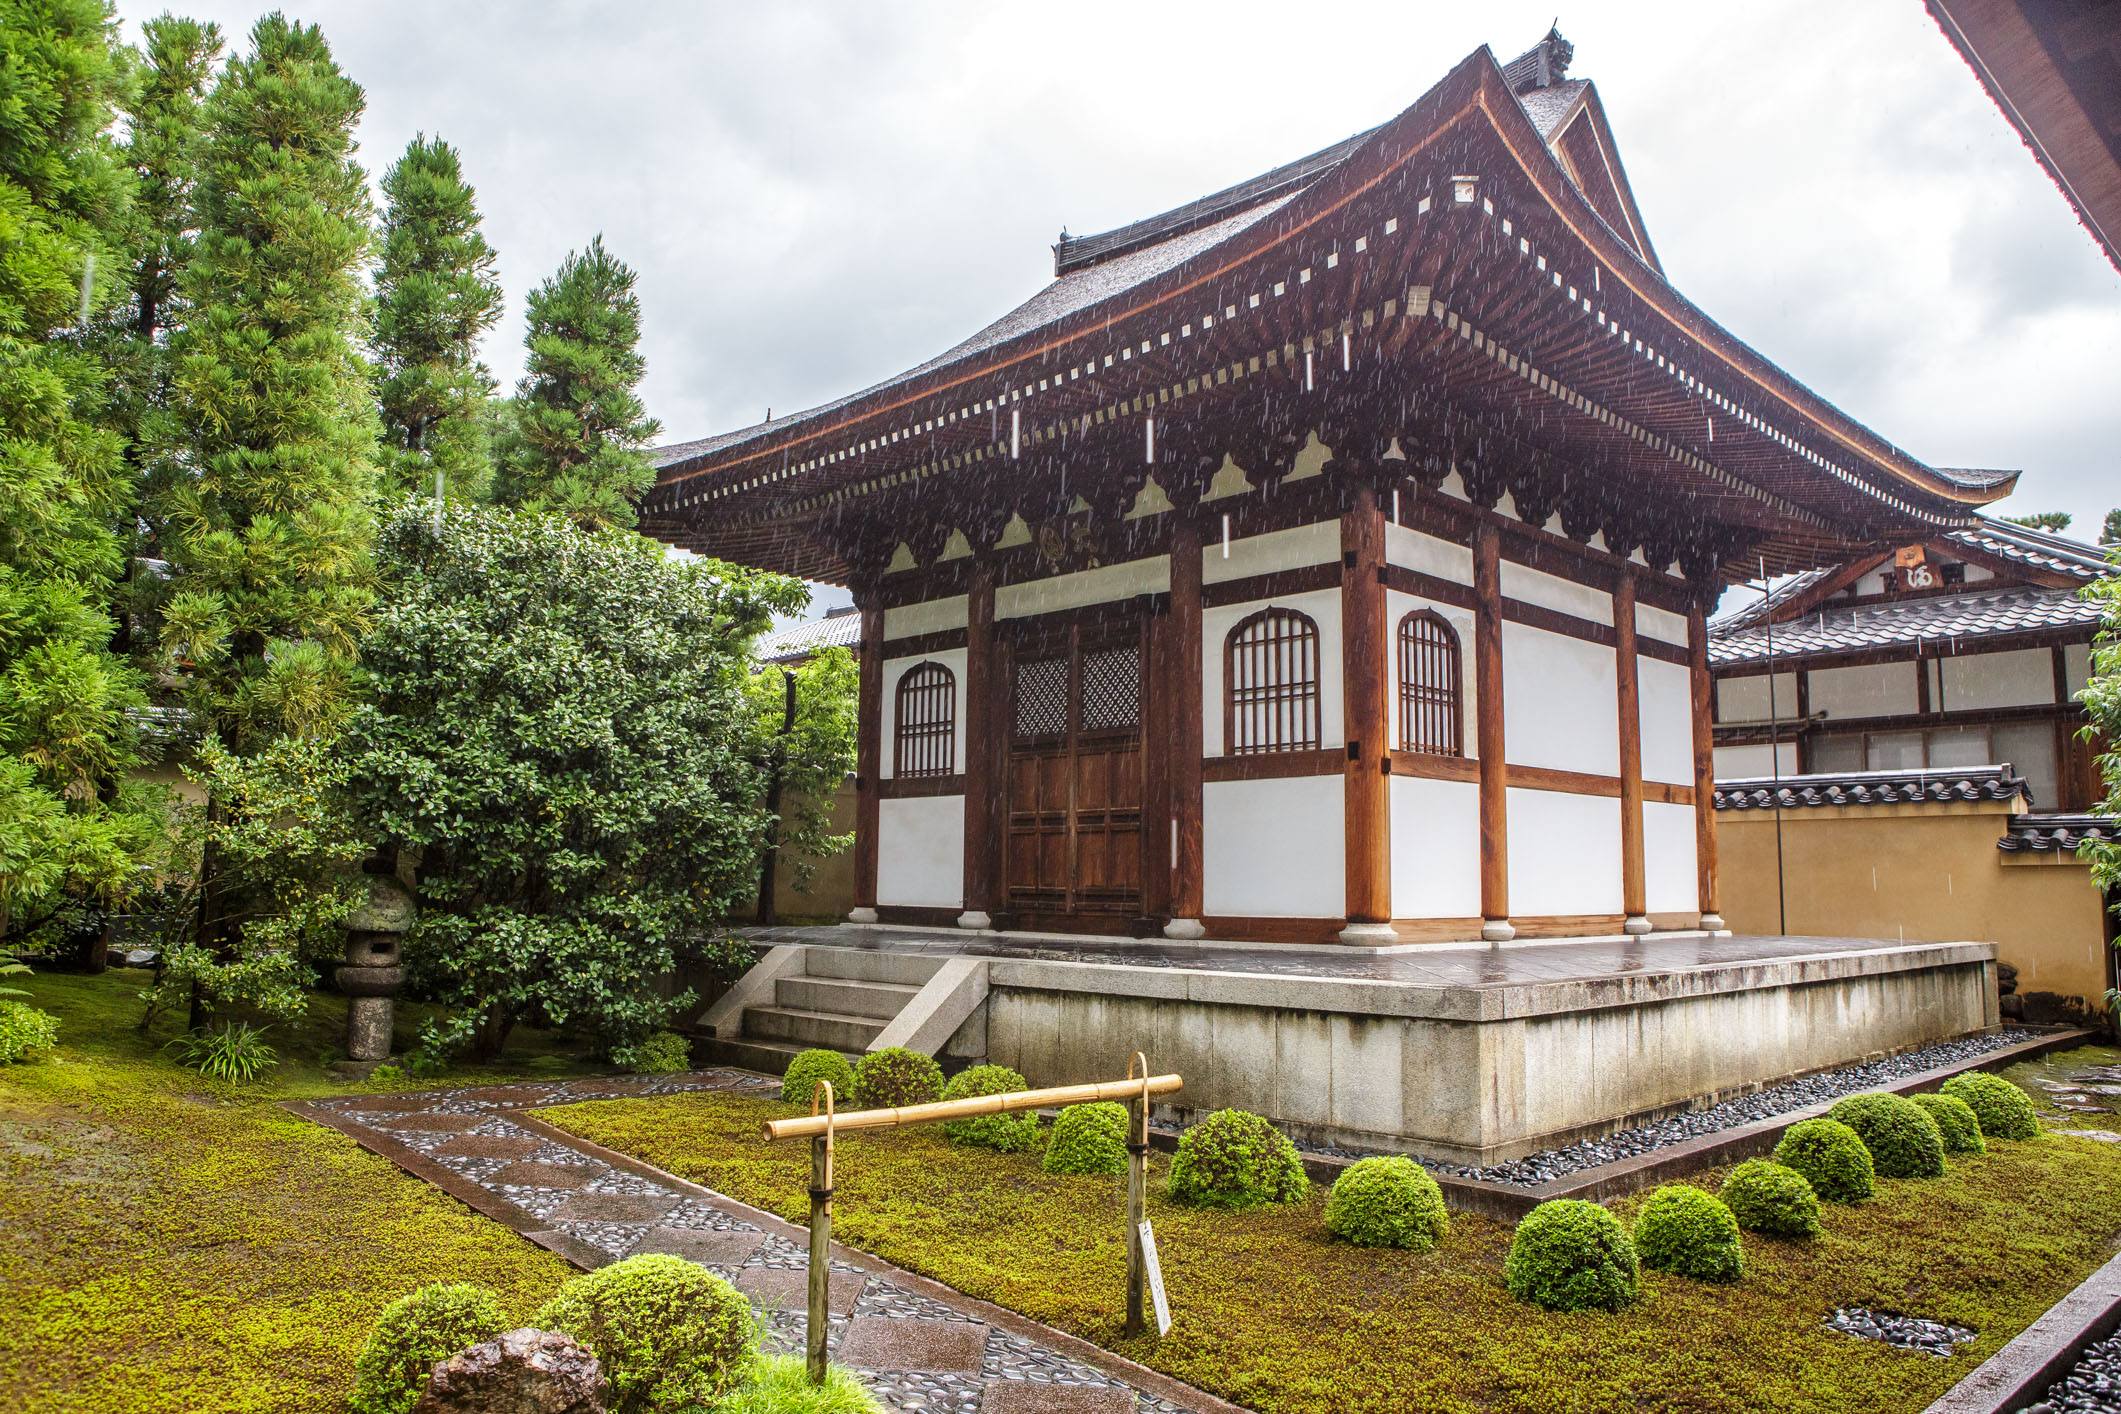 /Guewen/galeries/public/Voyages/Japon/kyoto/Ryoanji-Temple/Ryoanji-Temple_017.jpg